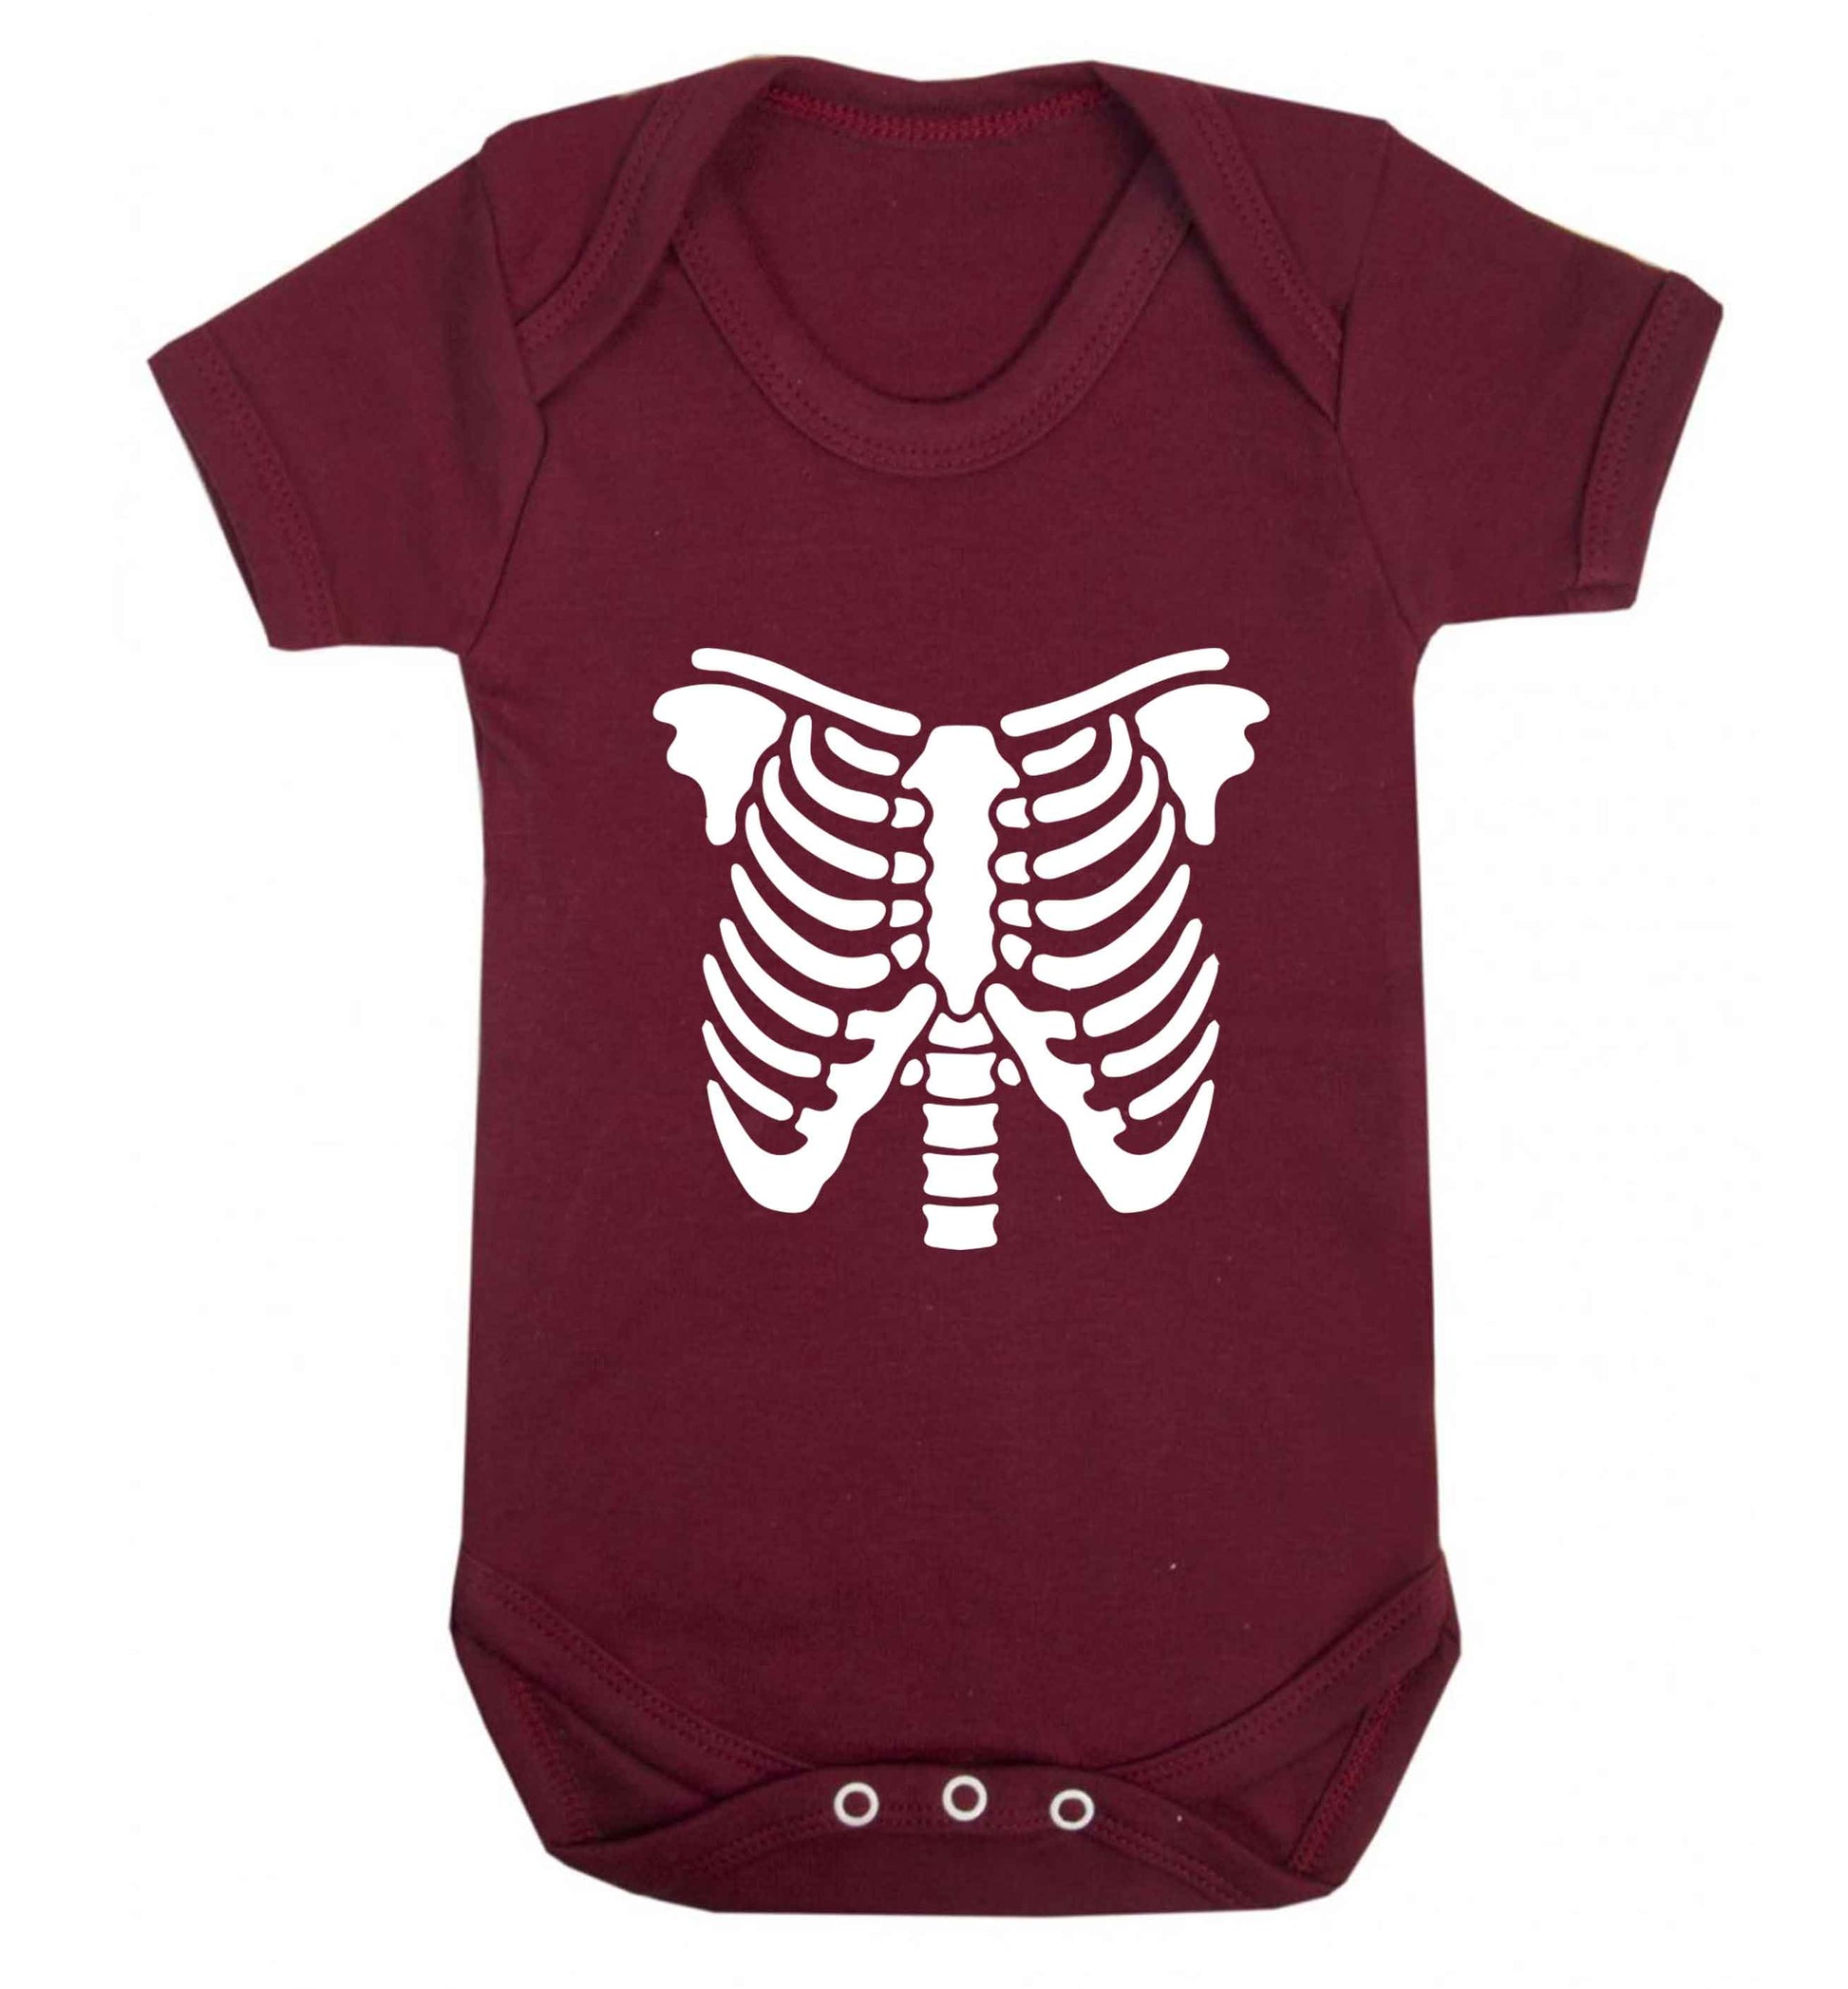 Skeleton ribcage baby vest maroon 18-24 months